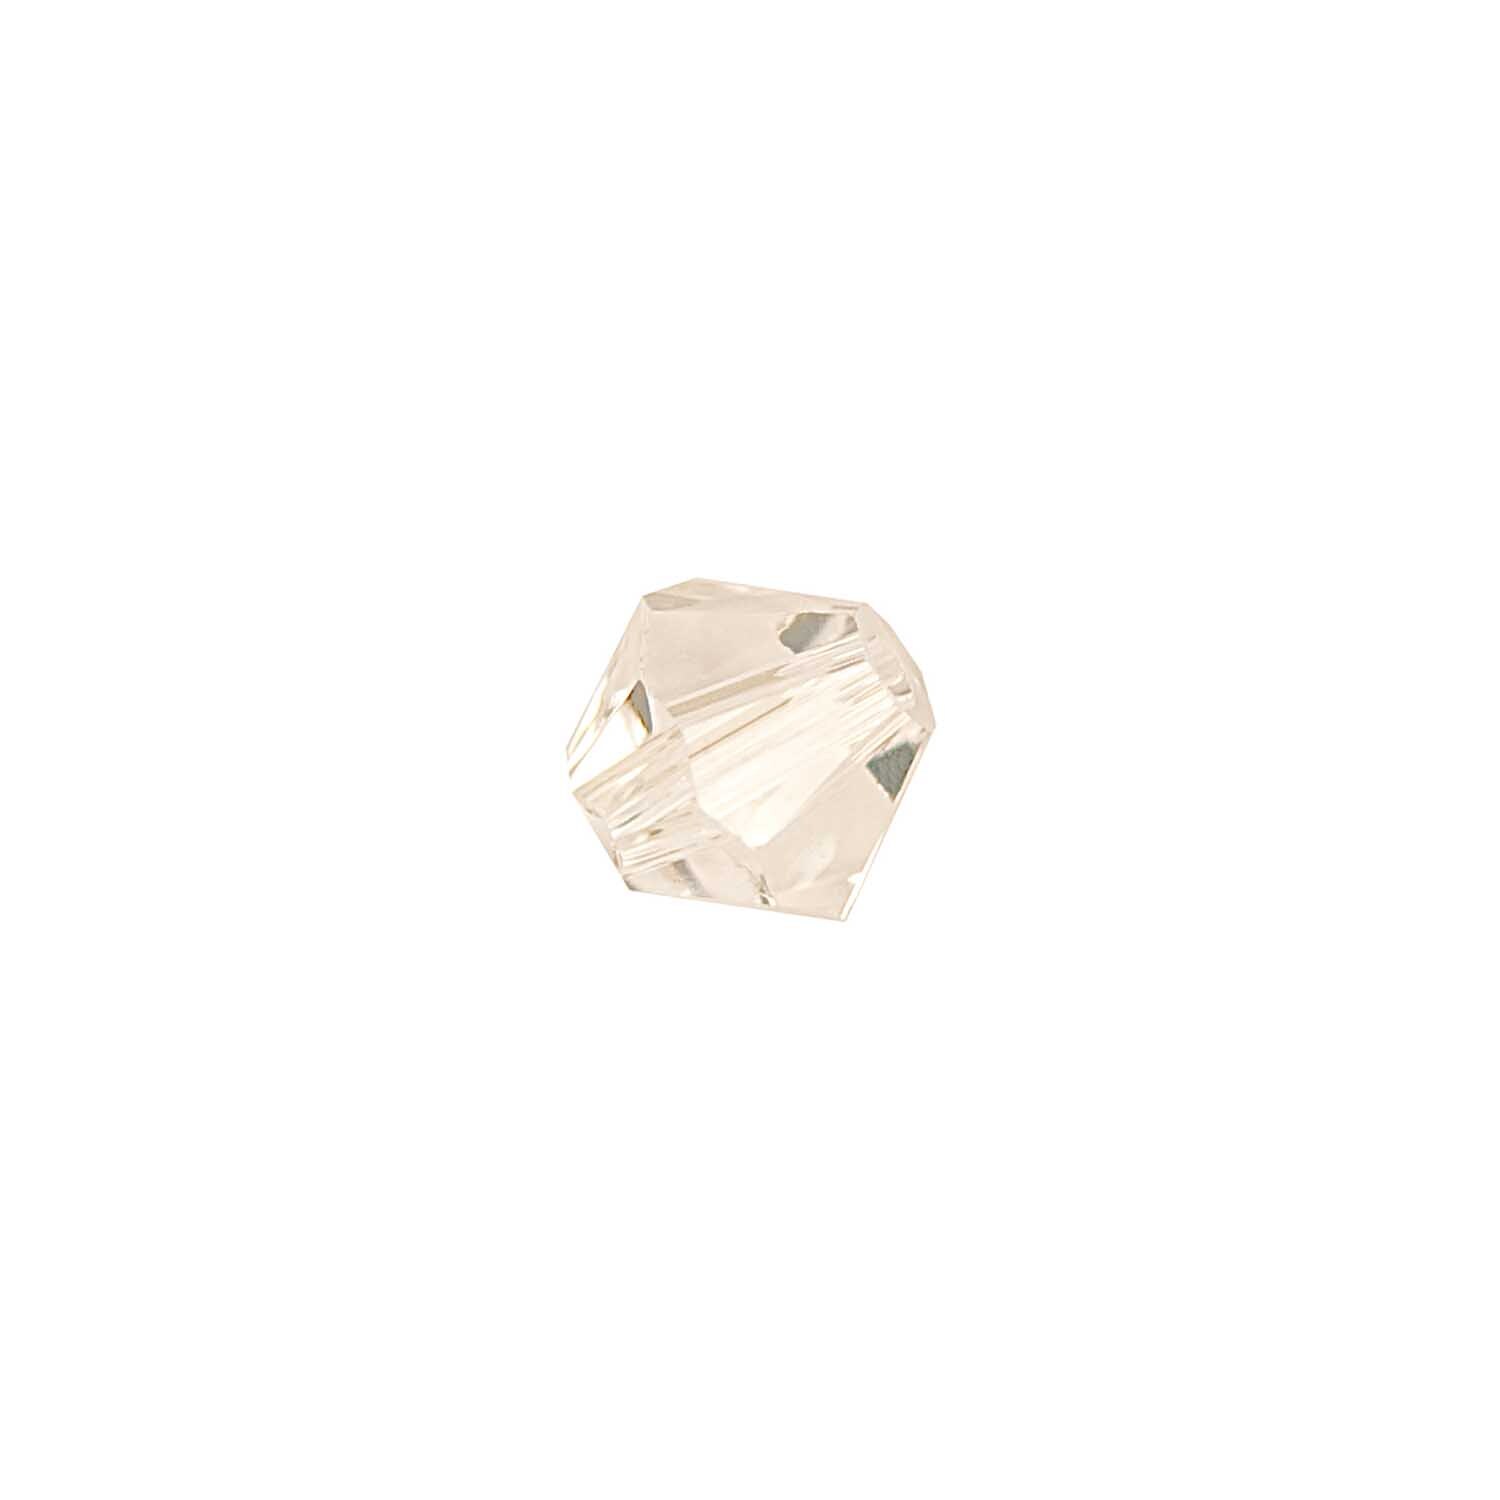 Glasschliff-Raute Perlen 4mm 20 Stück